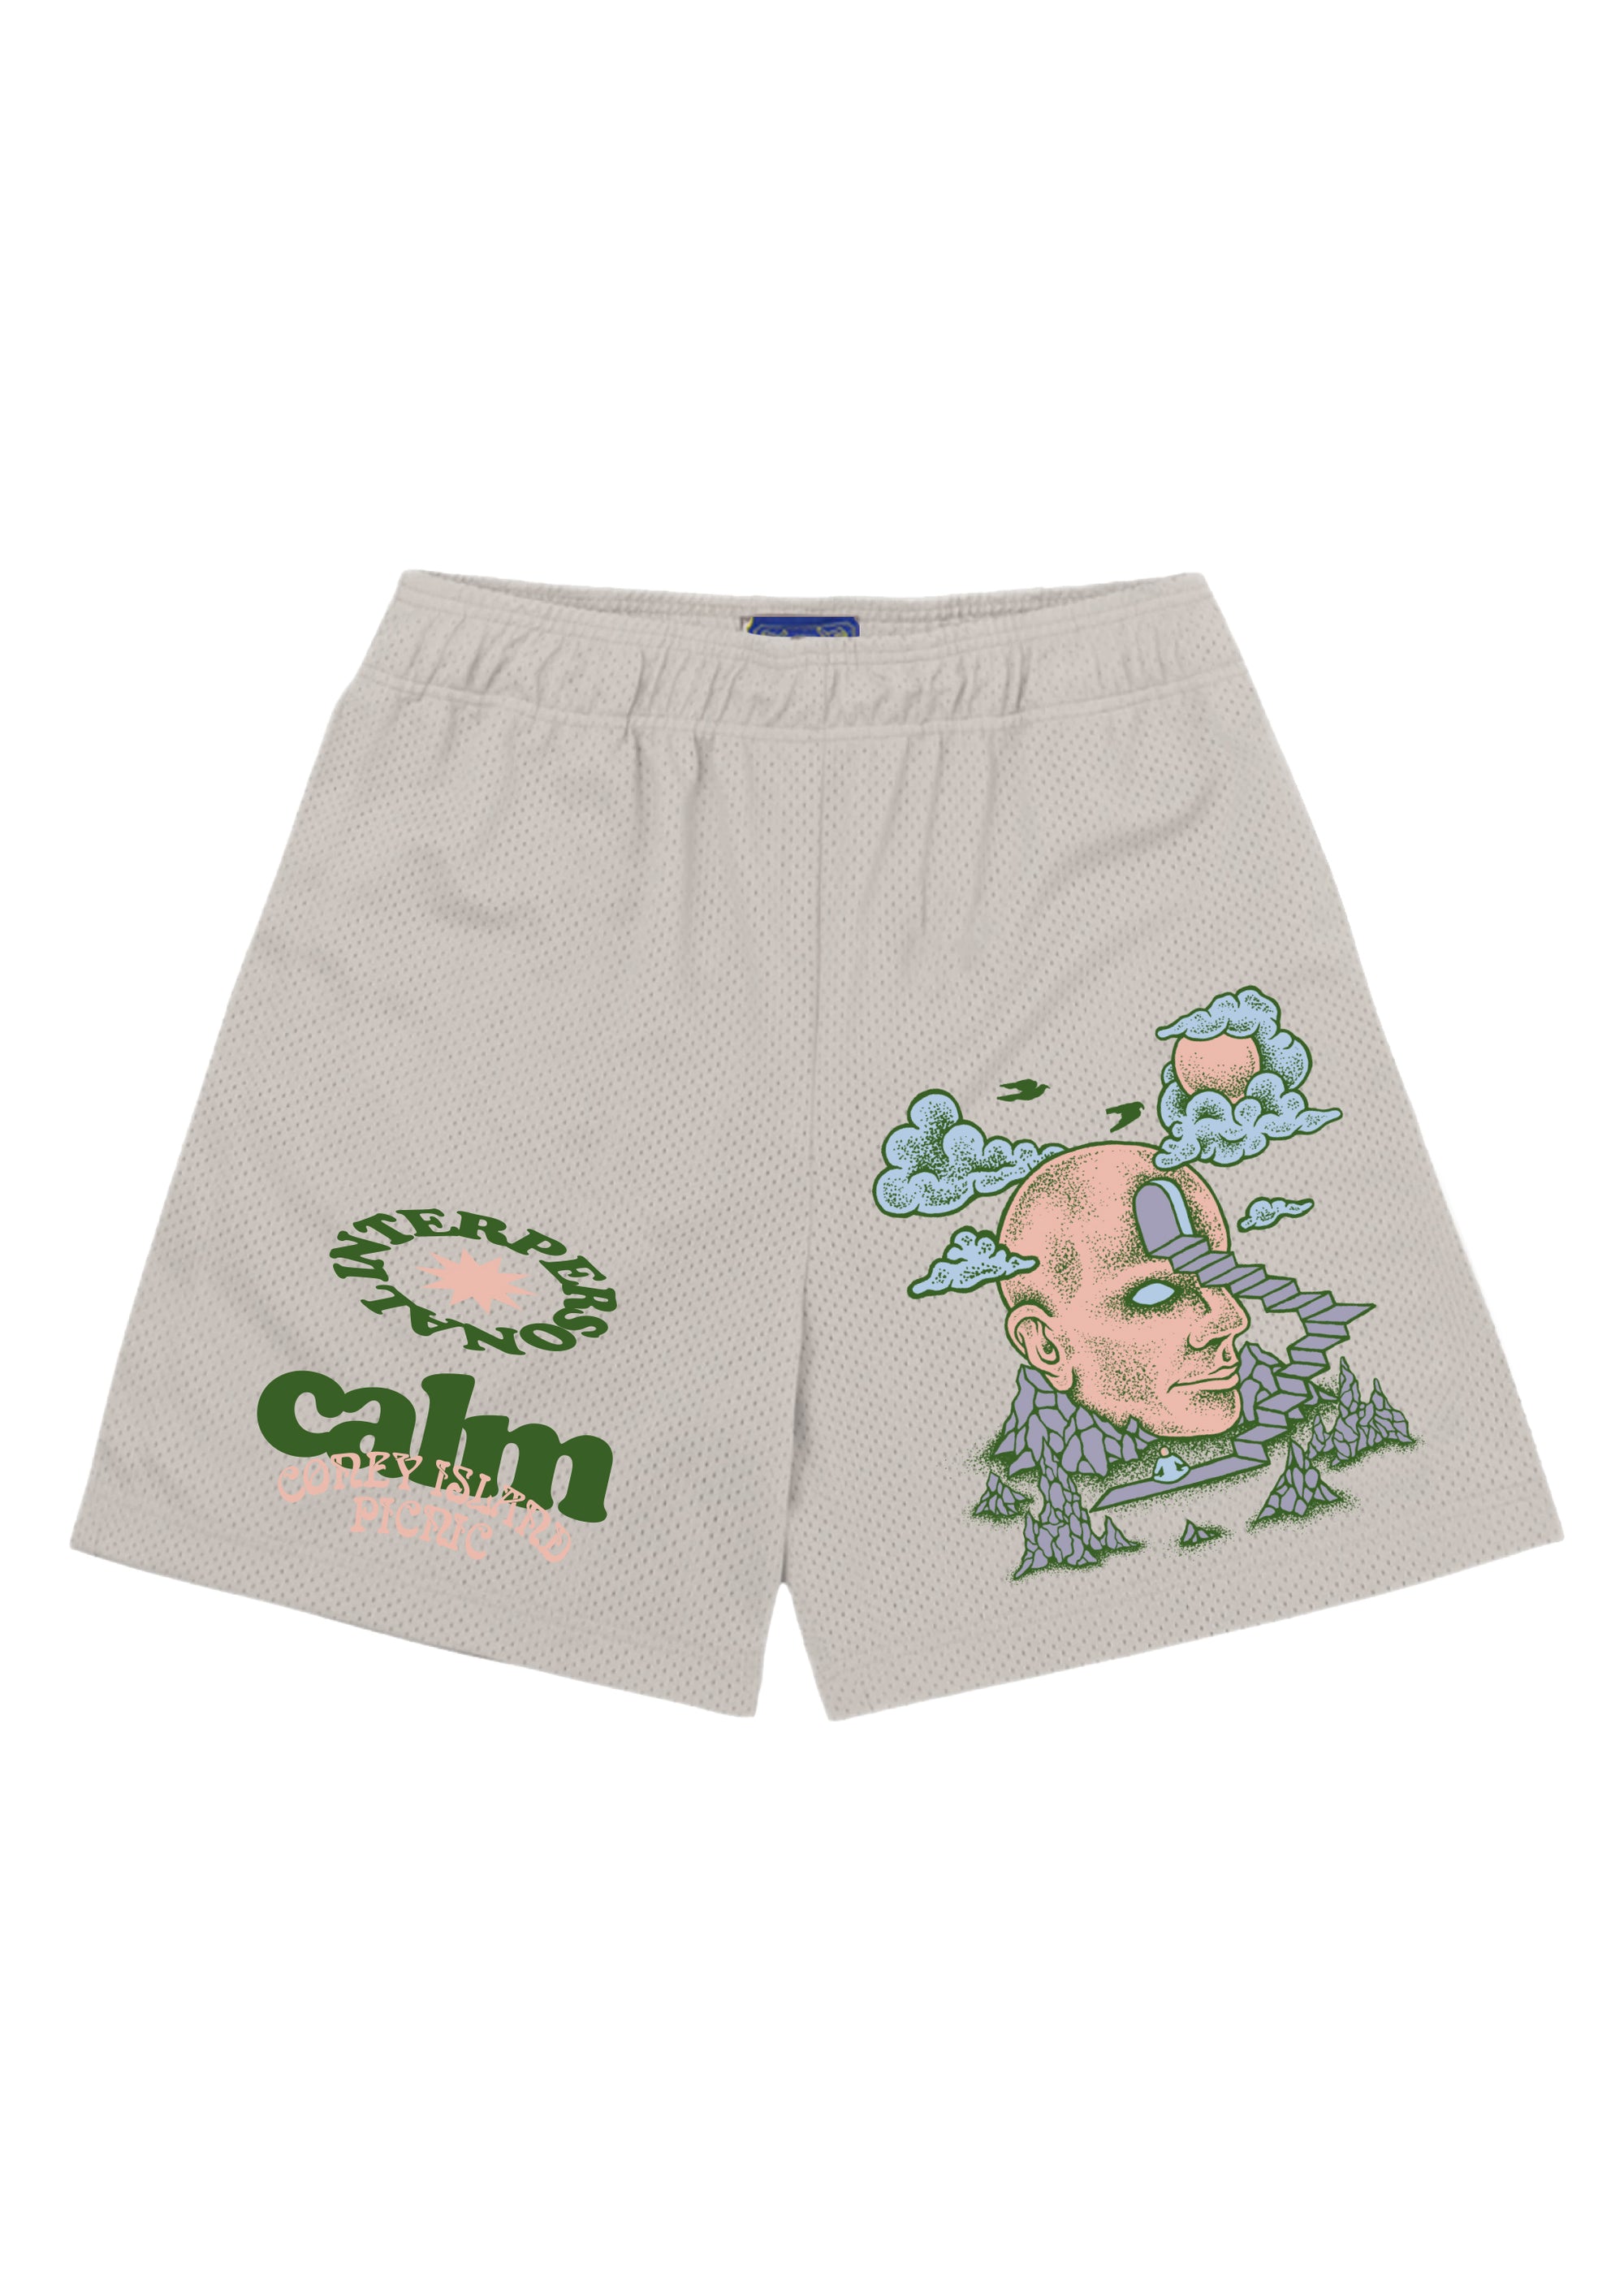 Interpersonal Calm Graphic Mesh Shorts